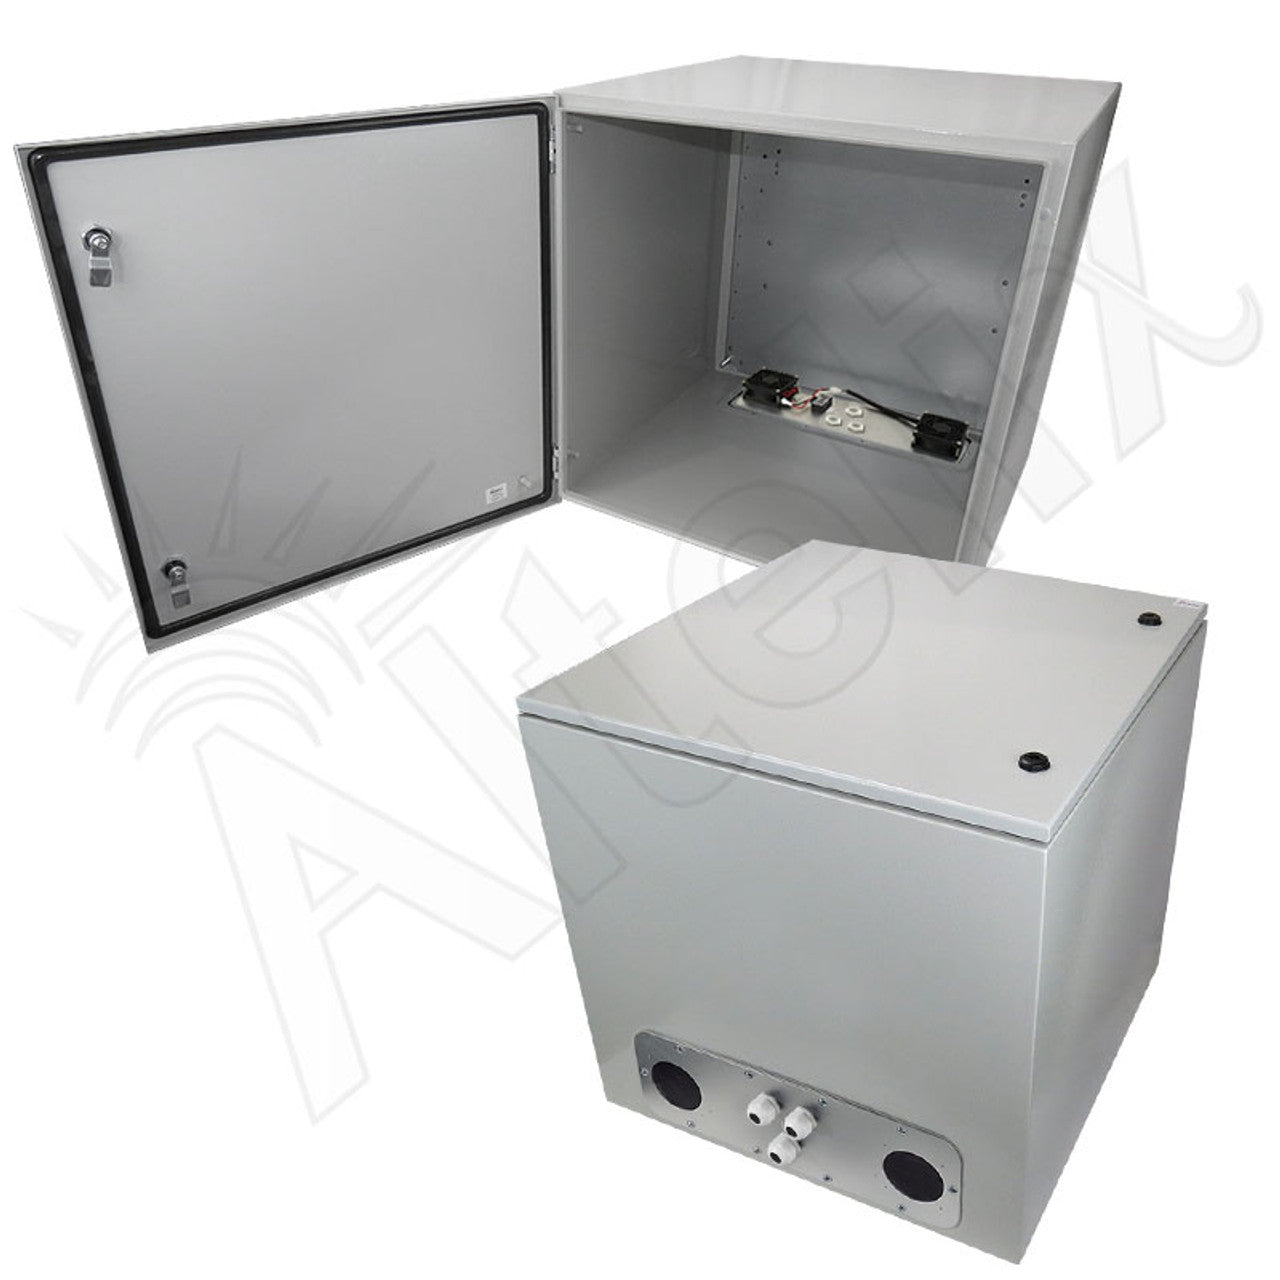 Altelix Steel Weatherproof NEMA Enclosure with Dual 24 VDC Cooling Fans